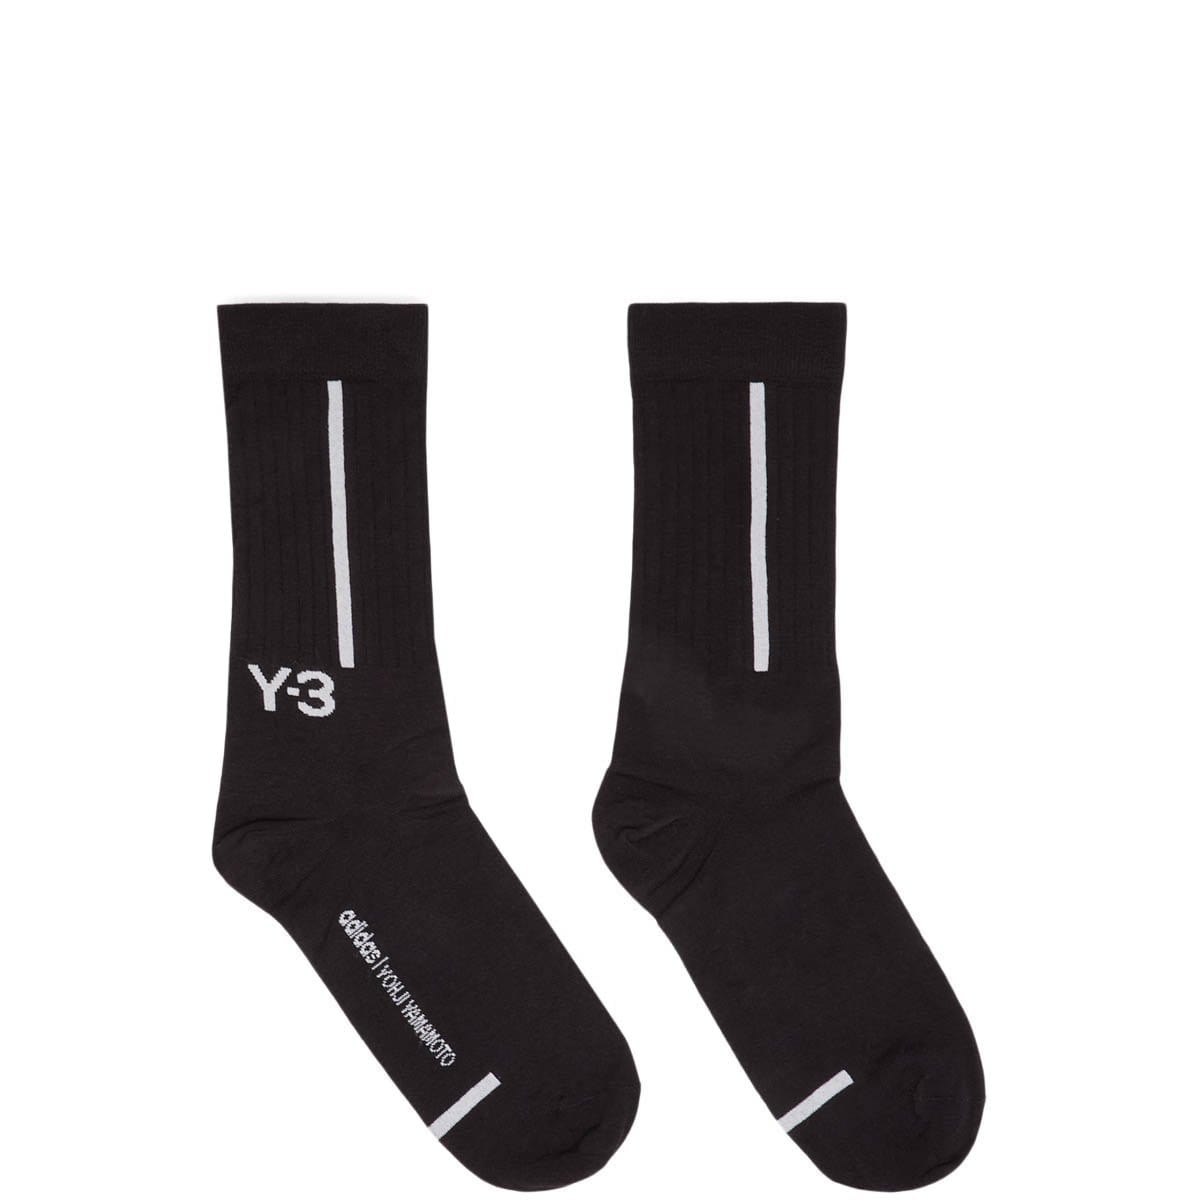 y3 sock shoes